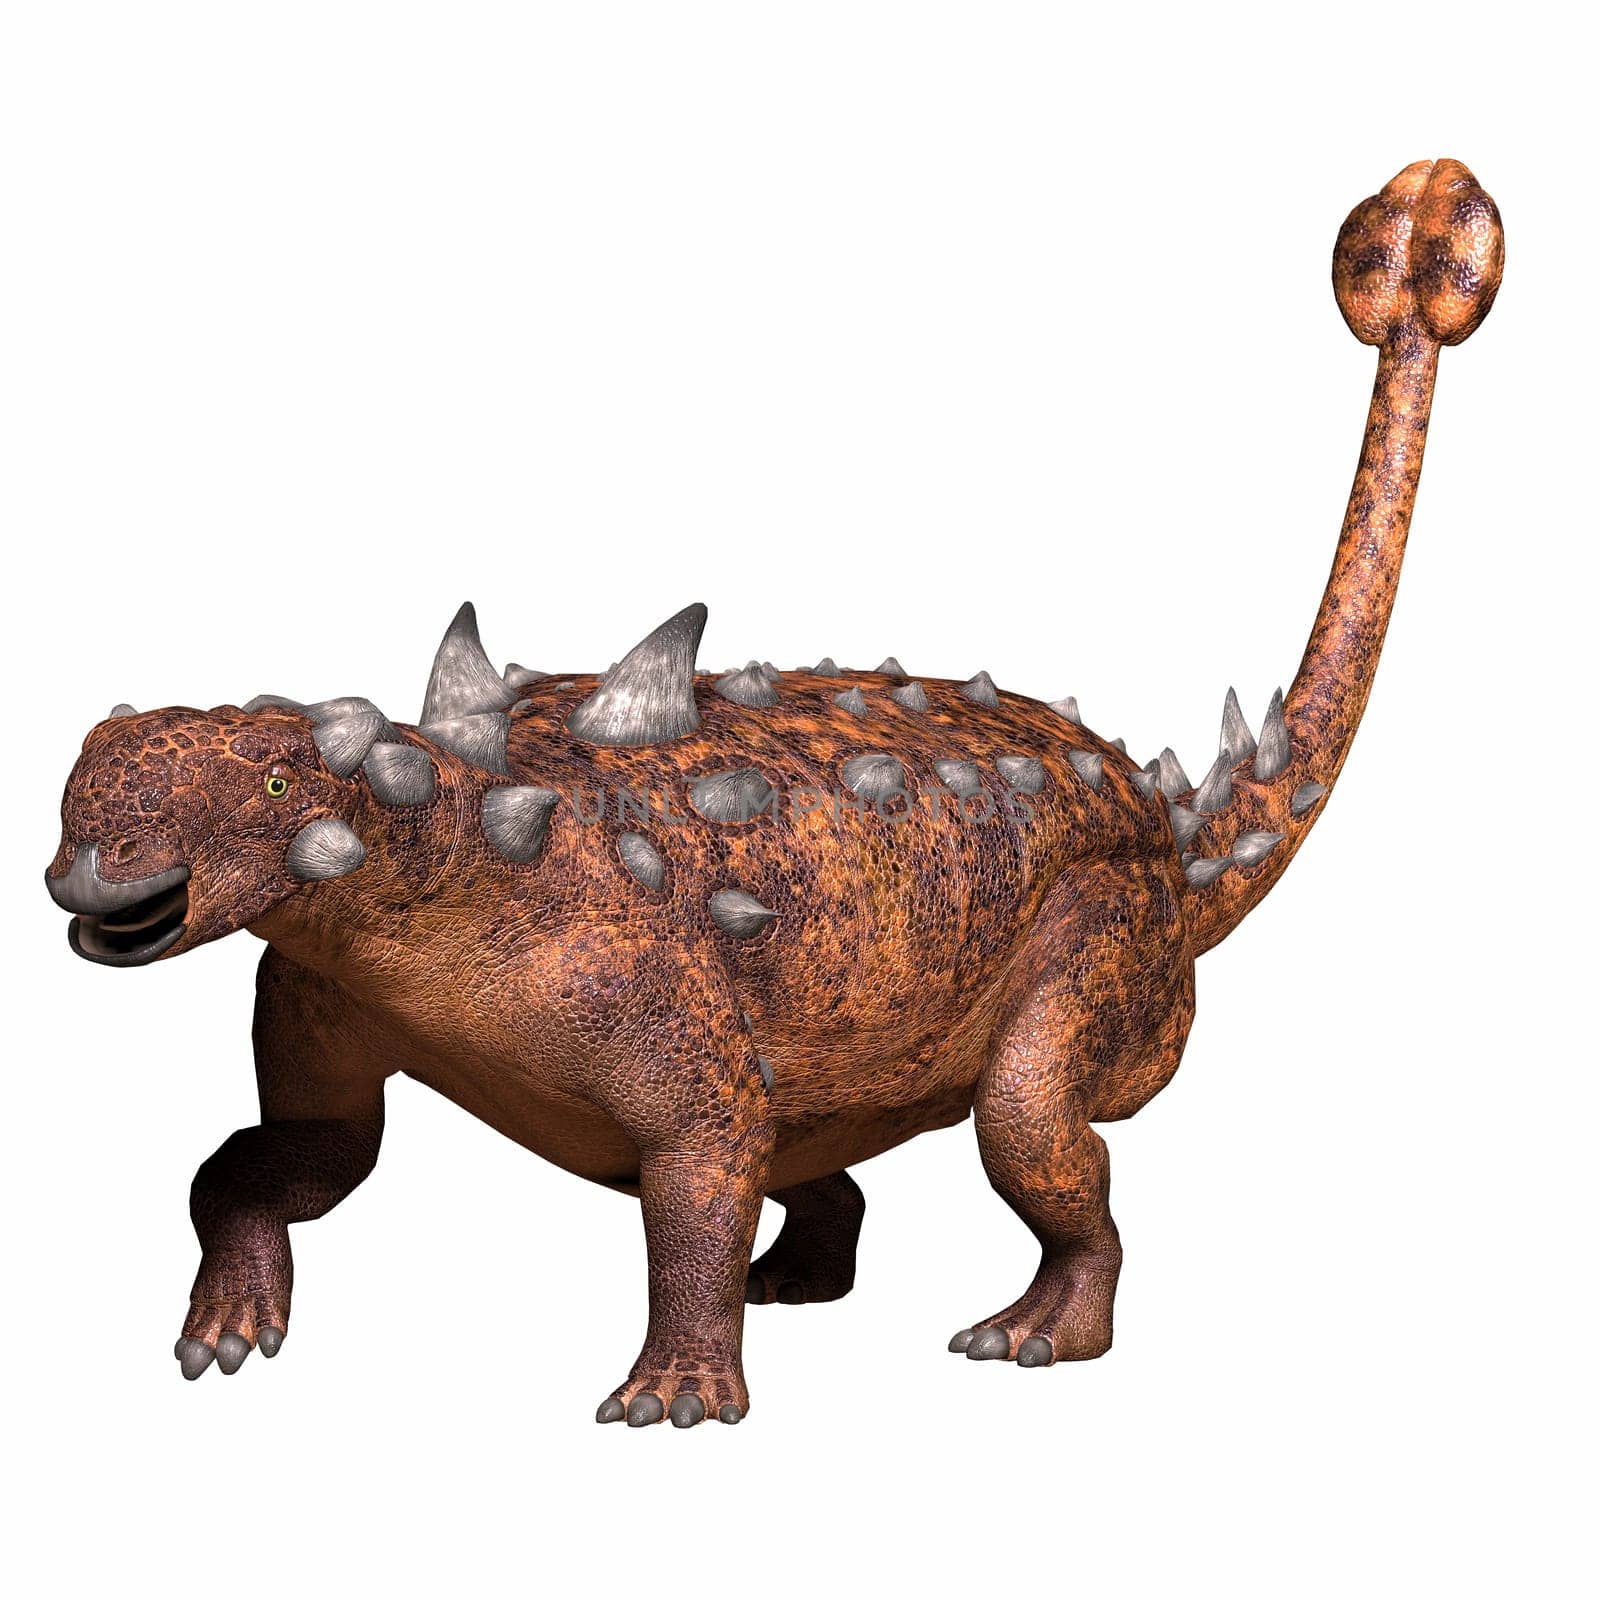 Euoplocephalus Ankylosaur by Catmando